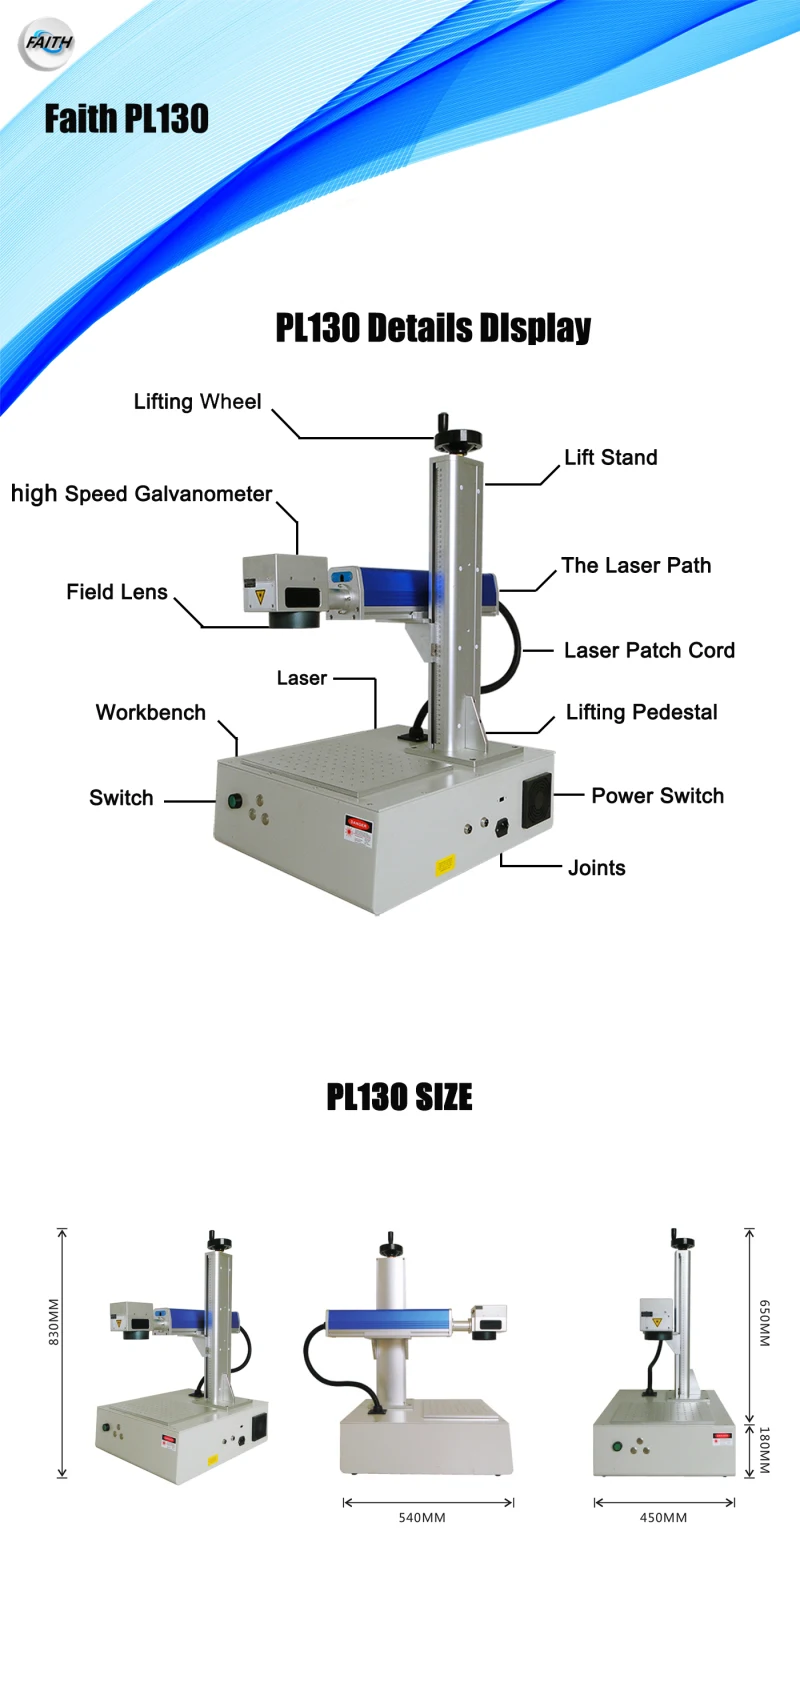 Multipurpose Fiber Laser Code Marking Machine for Metal